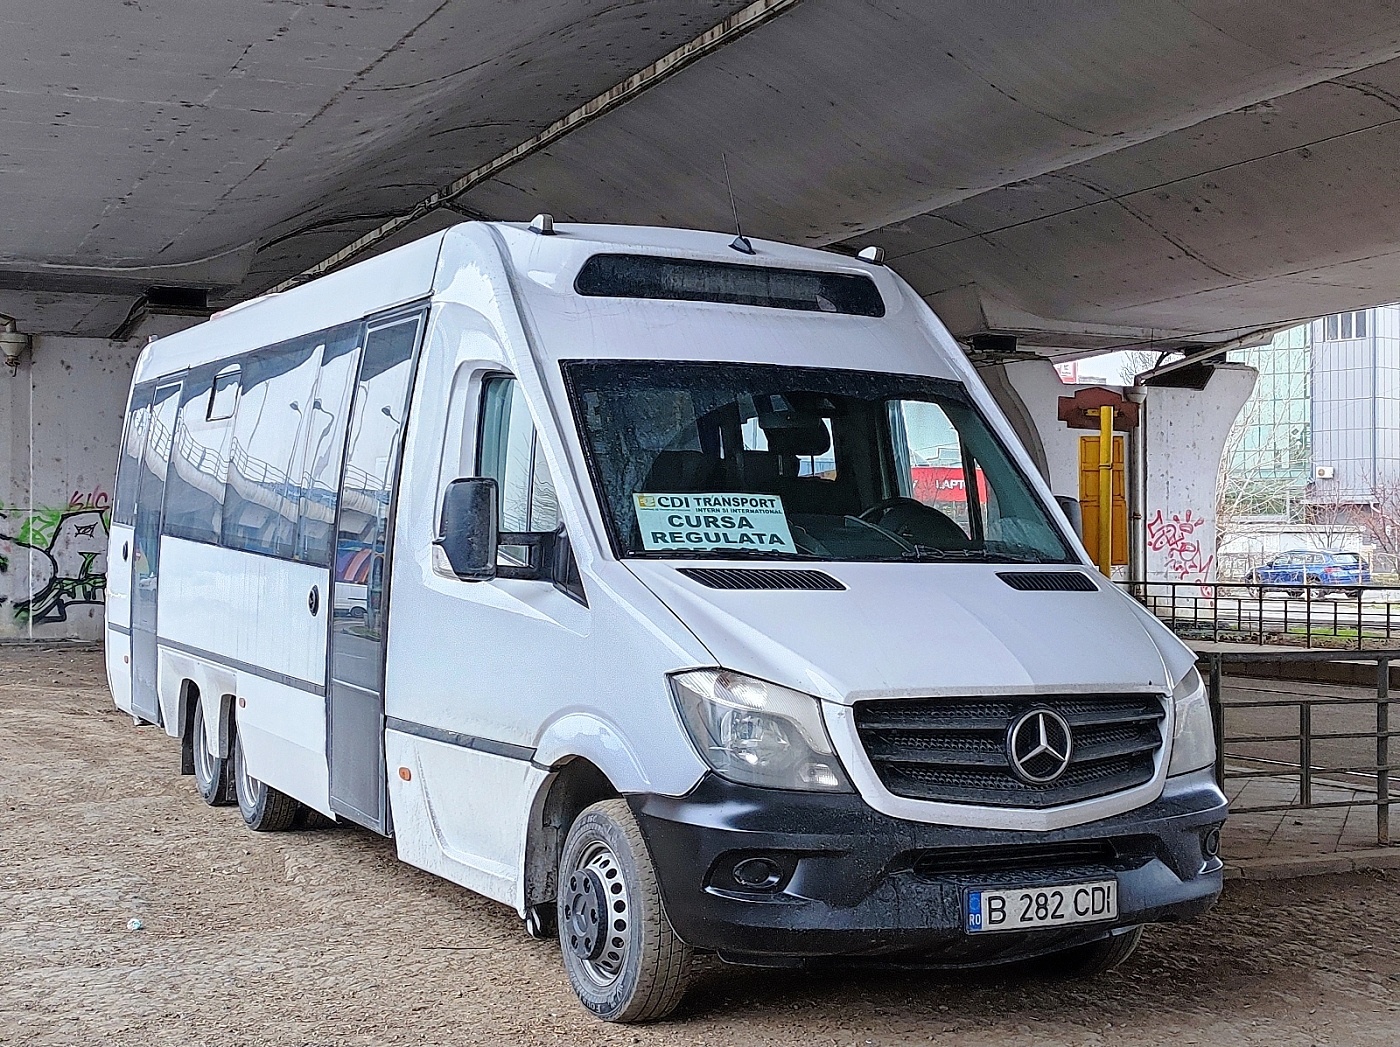 Mercedes-Benz Sprinter / Eurotrans XXI Trituro #B 282 CDI